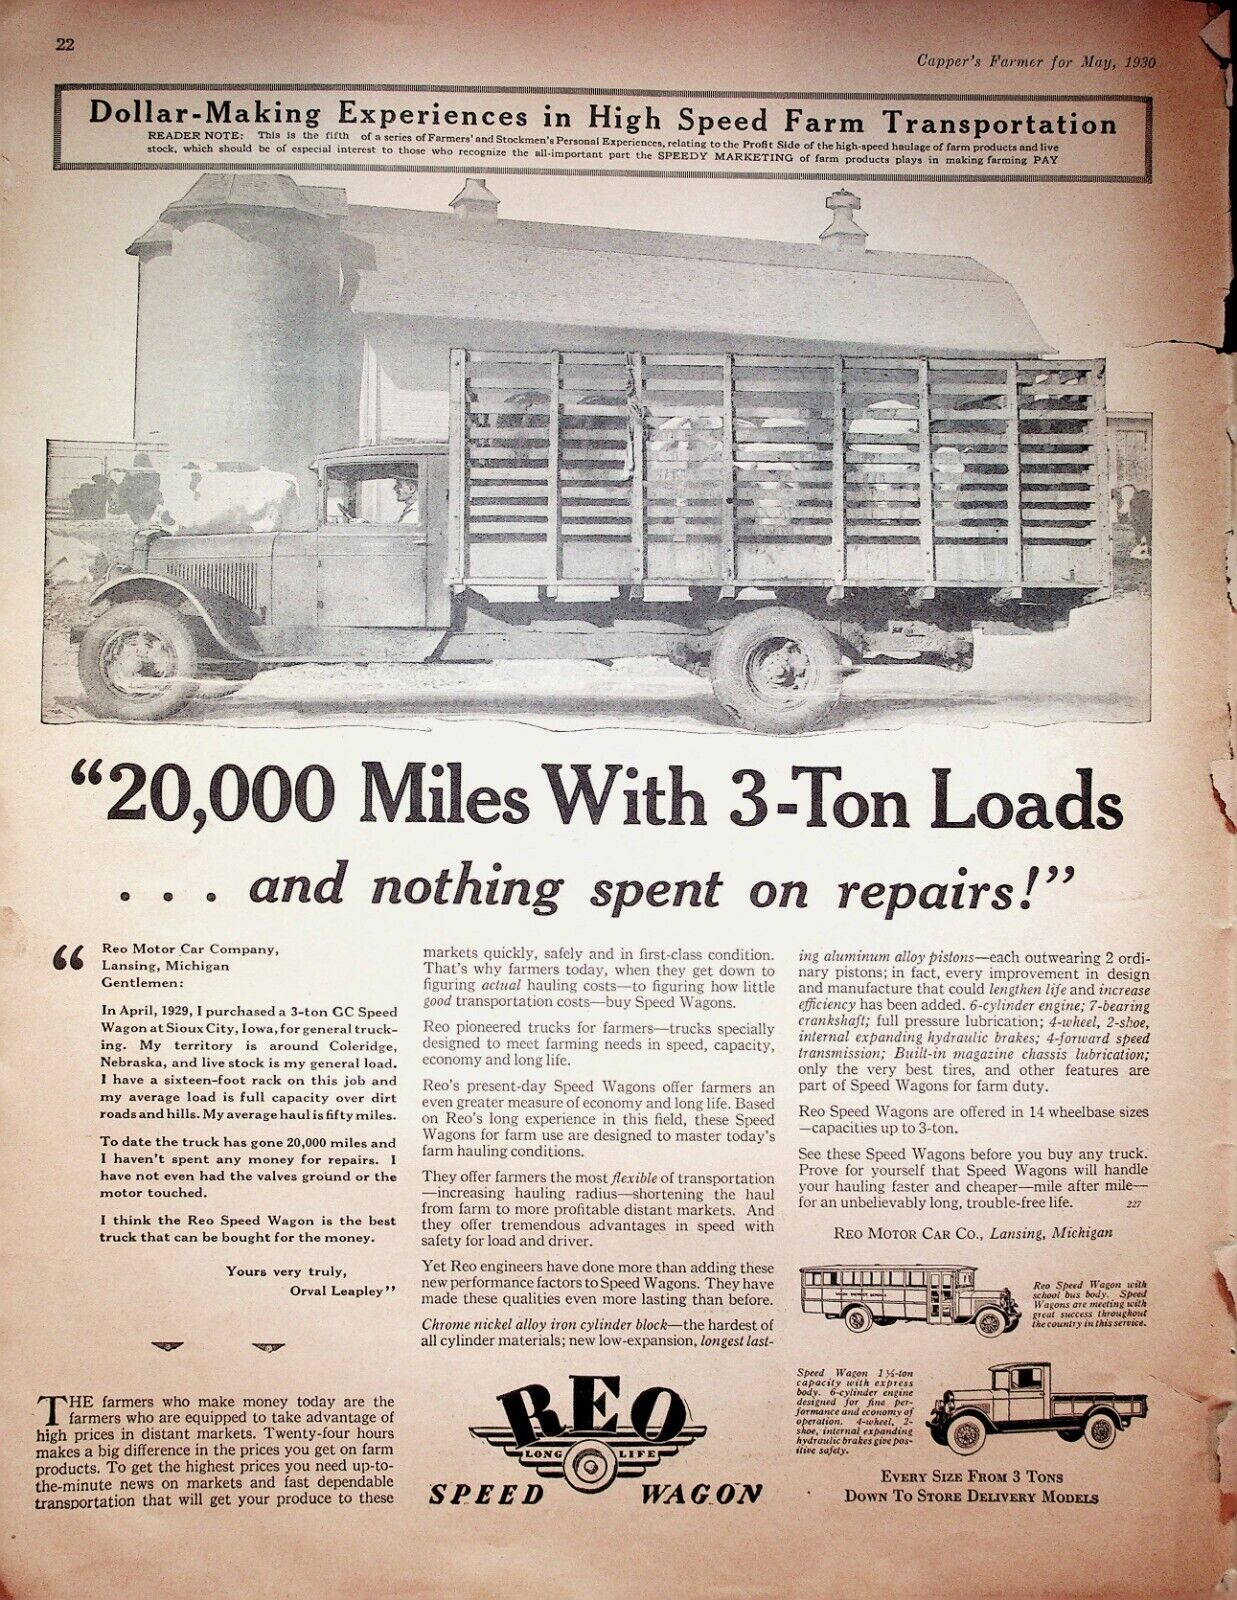 1930 REO Speed Wagon Motor Car Co. Lansing Michigan Farm Truck - Vintage Ad